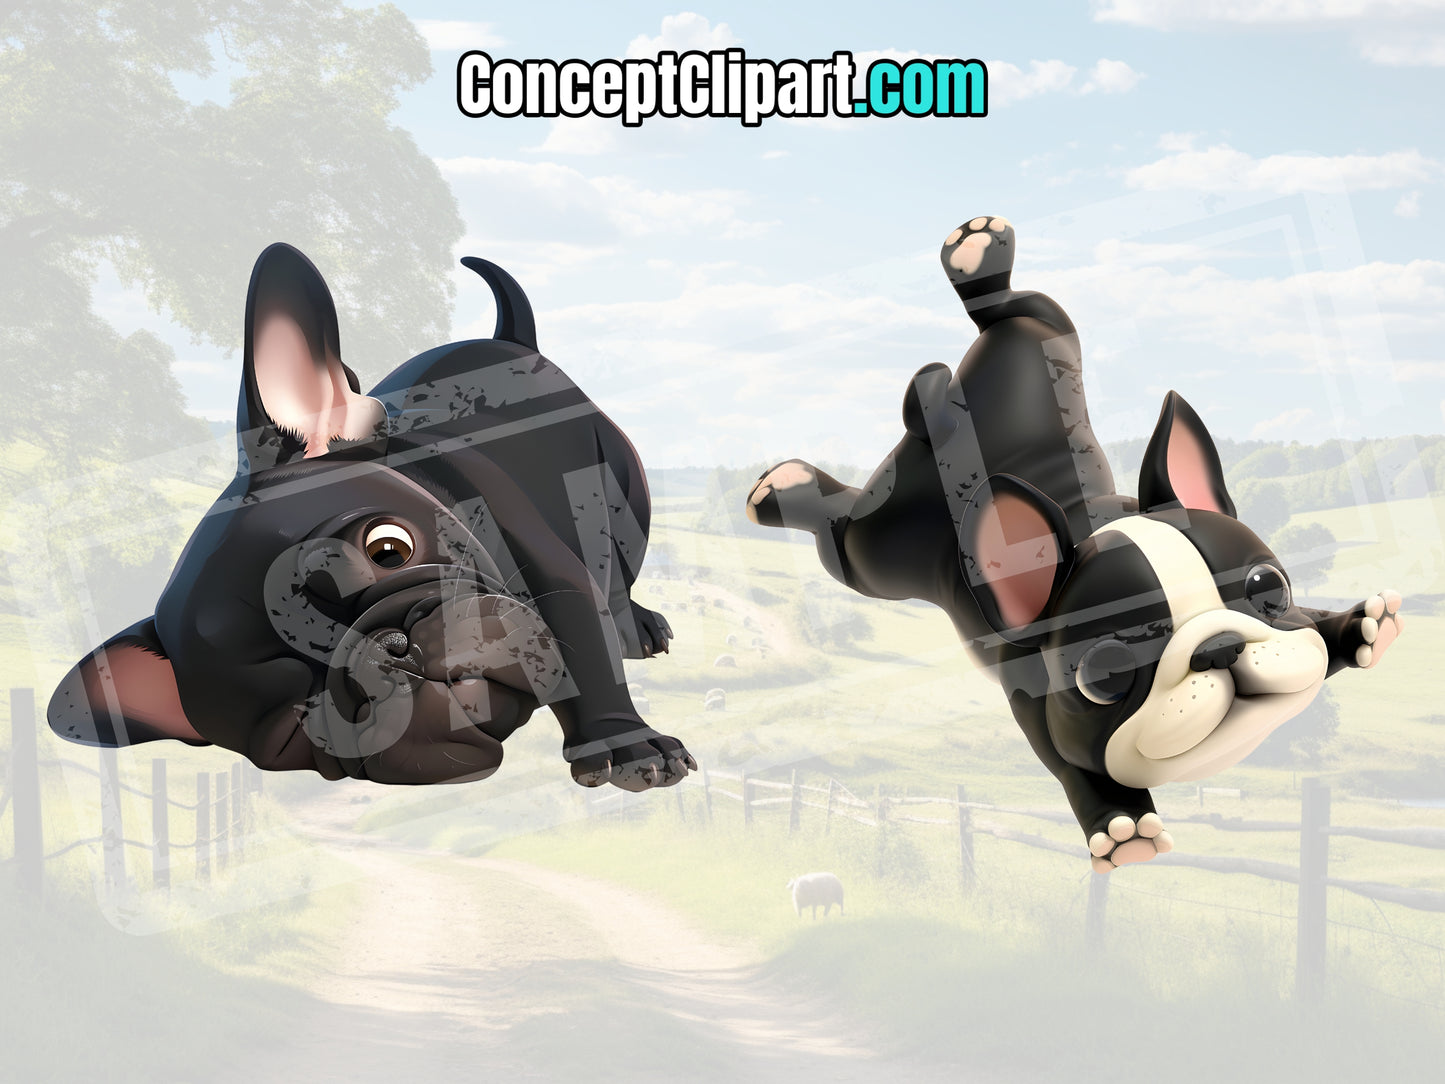 10 x 3D Cartoon Style French Bulldogs Clipart Bundle